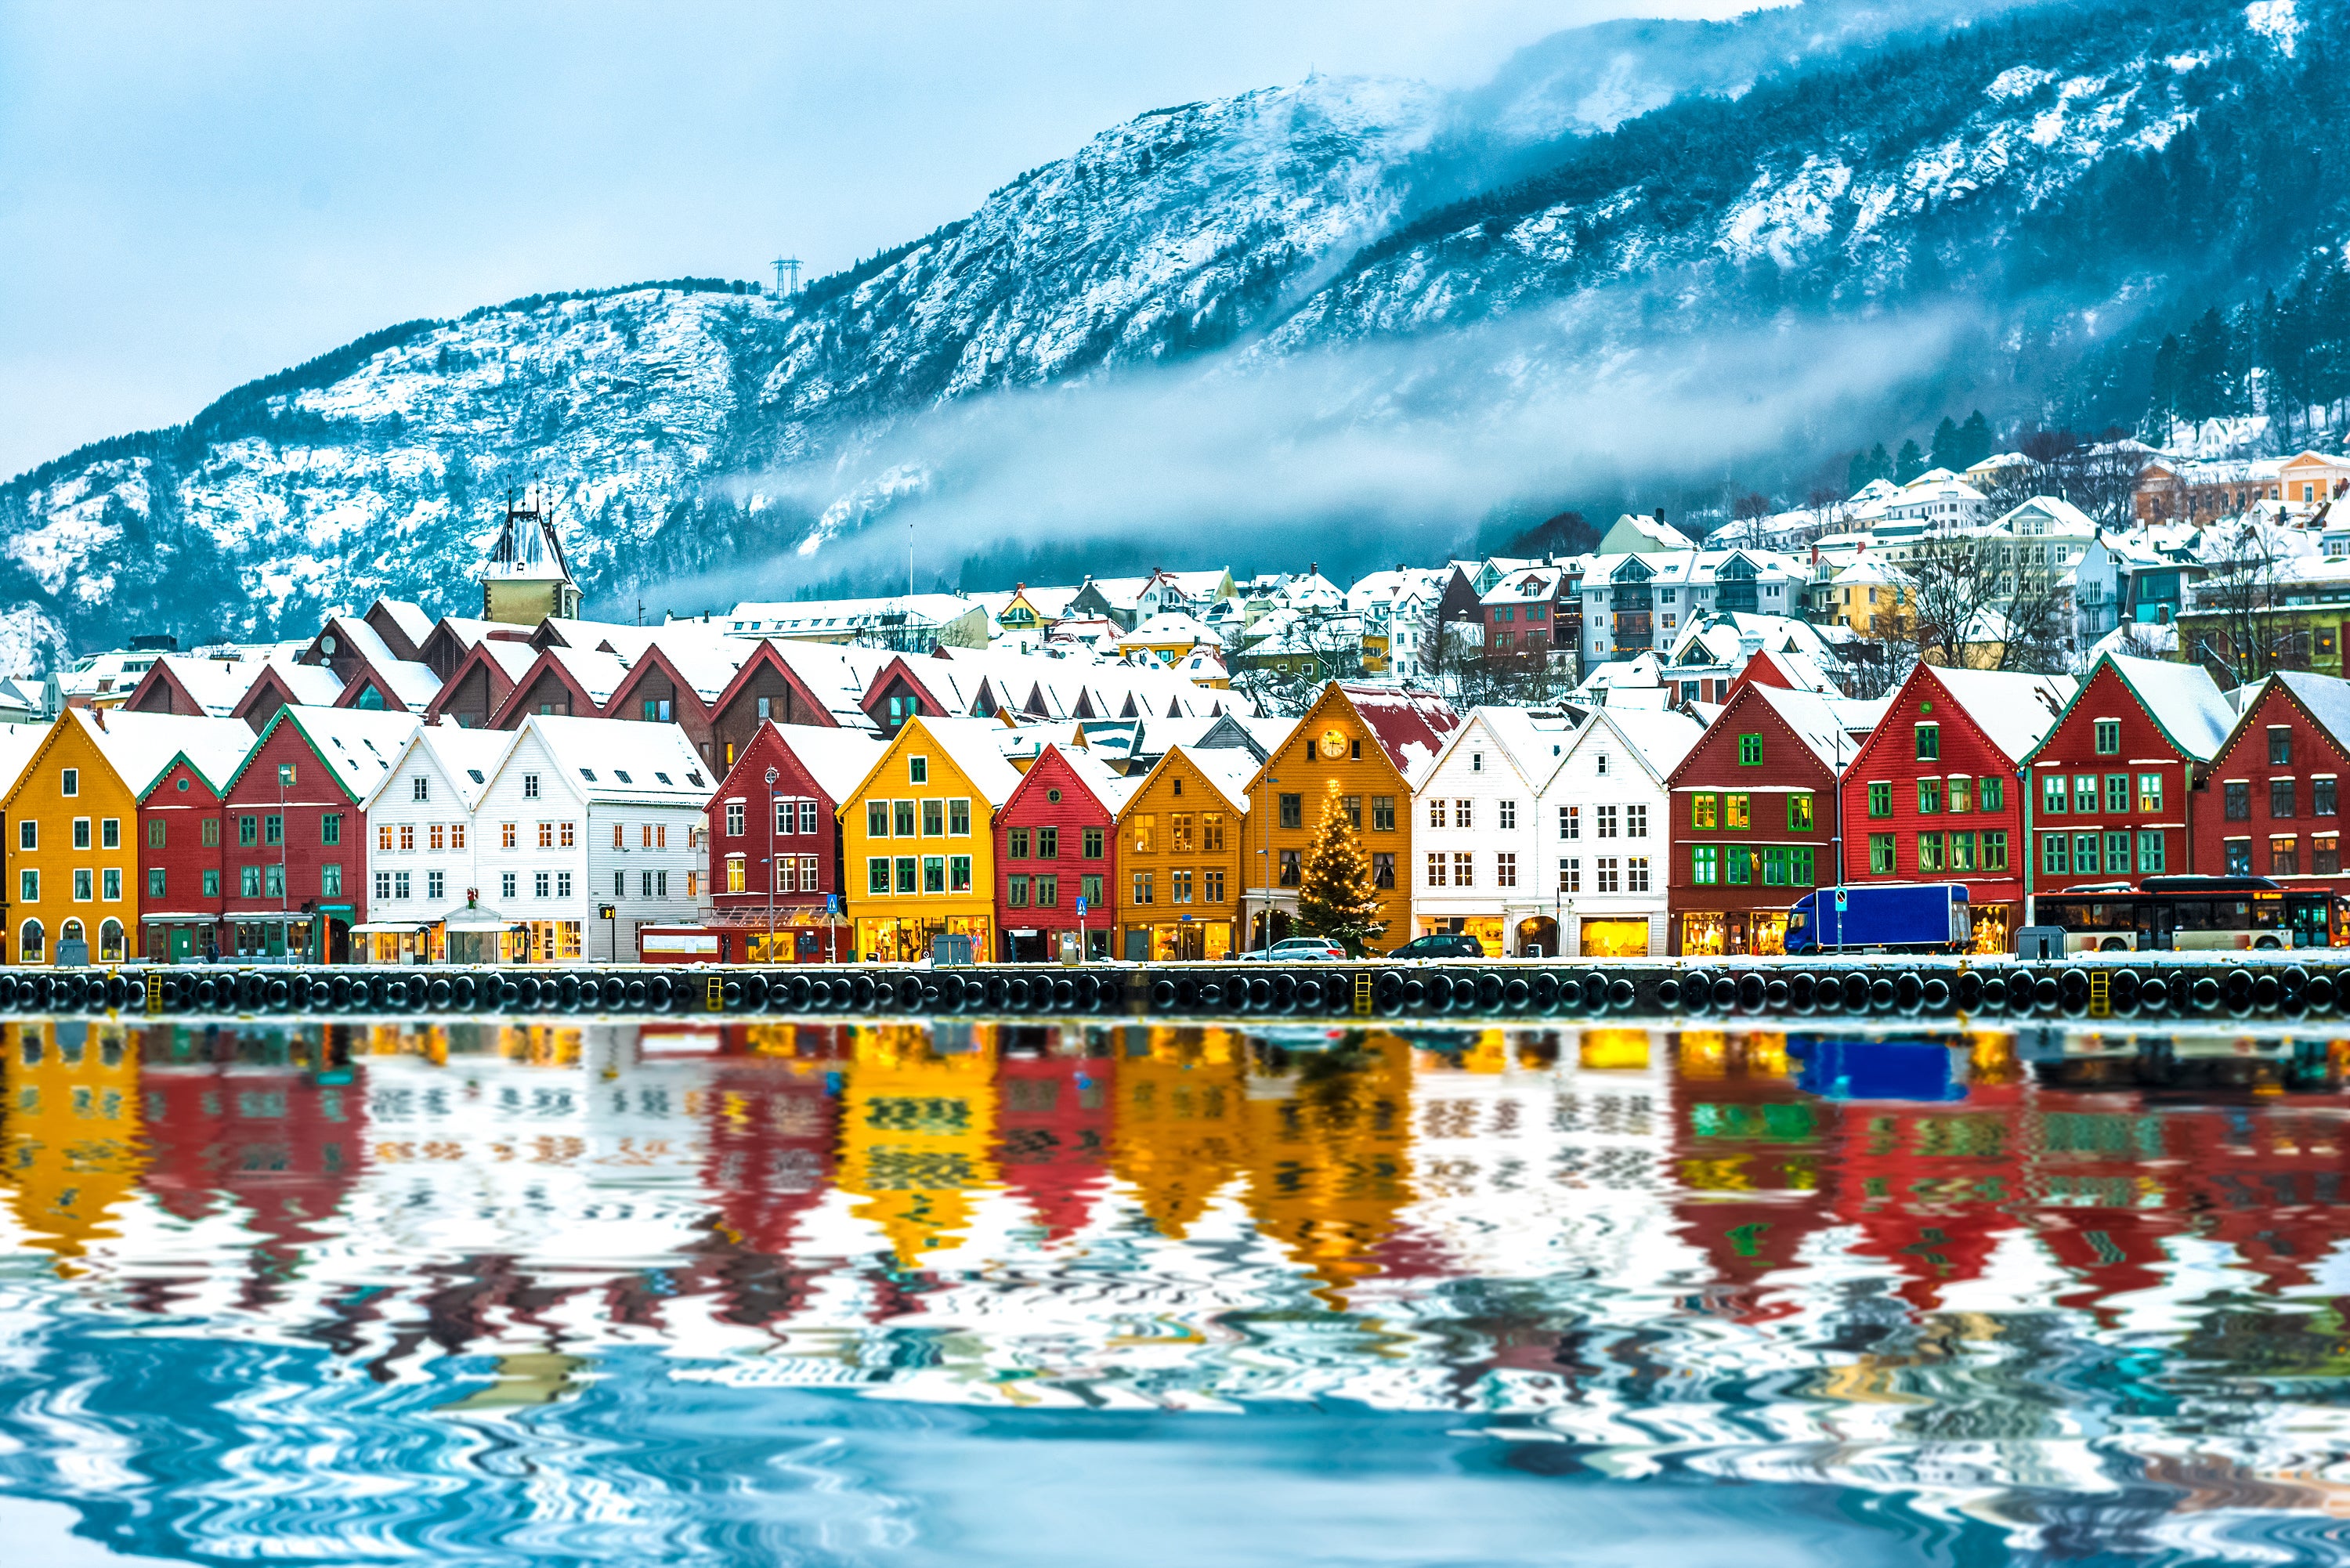 Bergen, Norway’s second-largest city